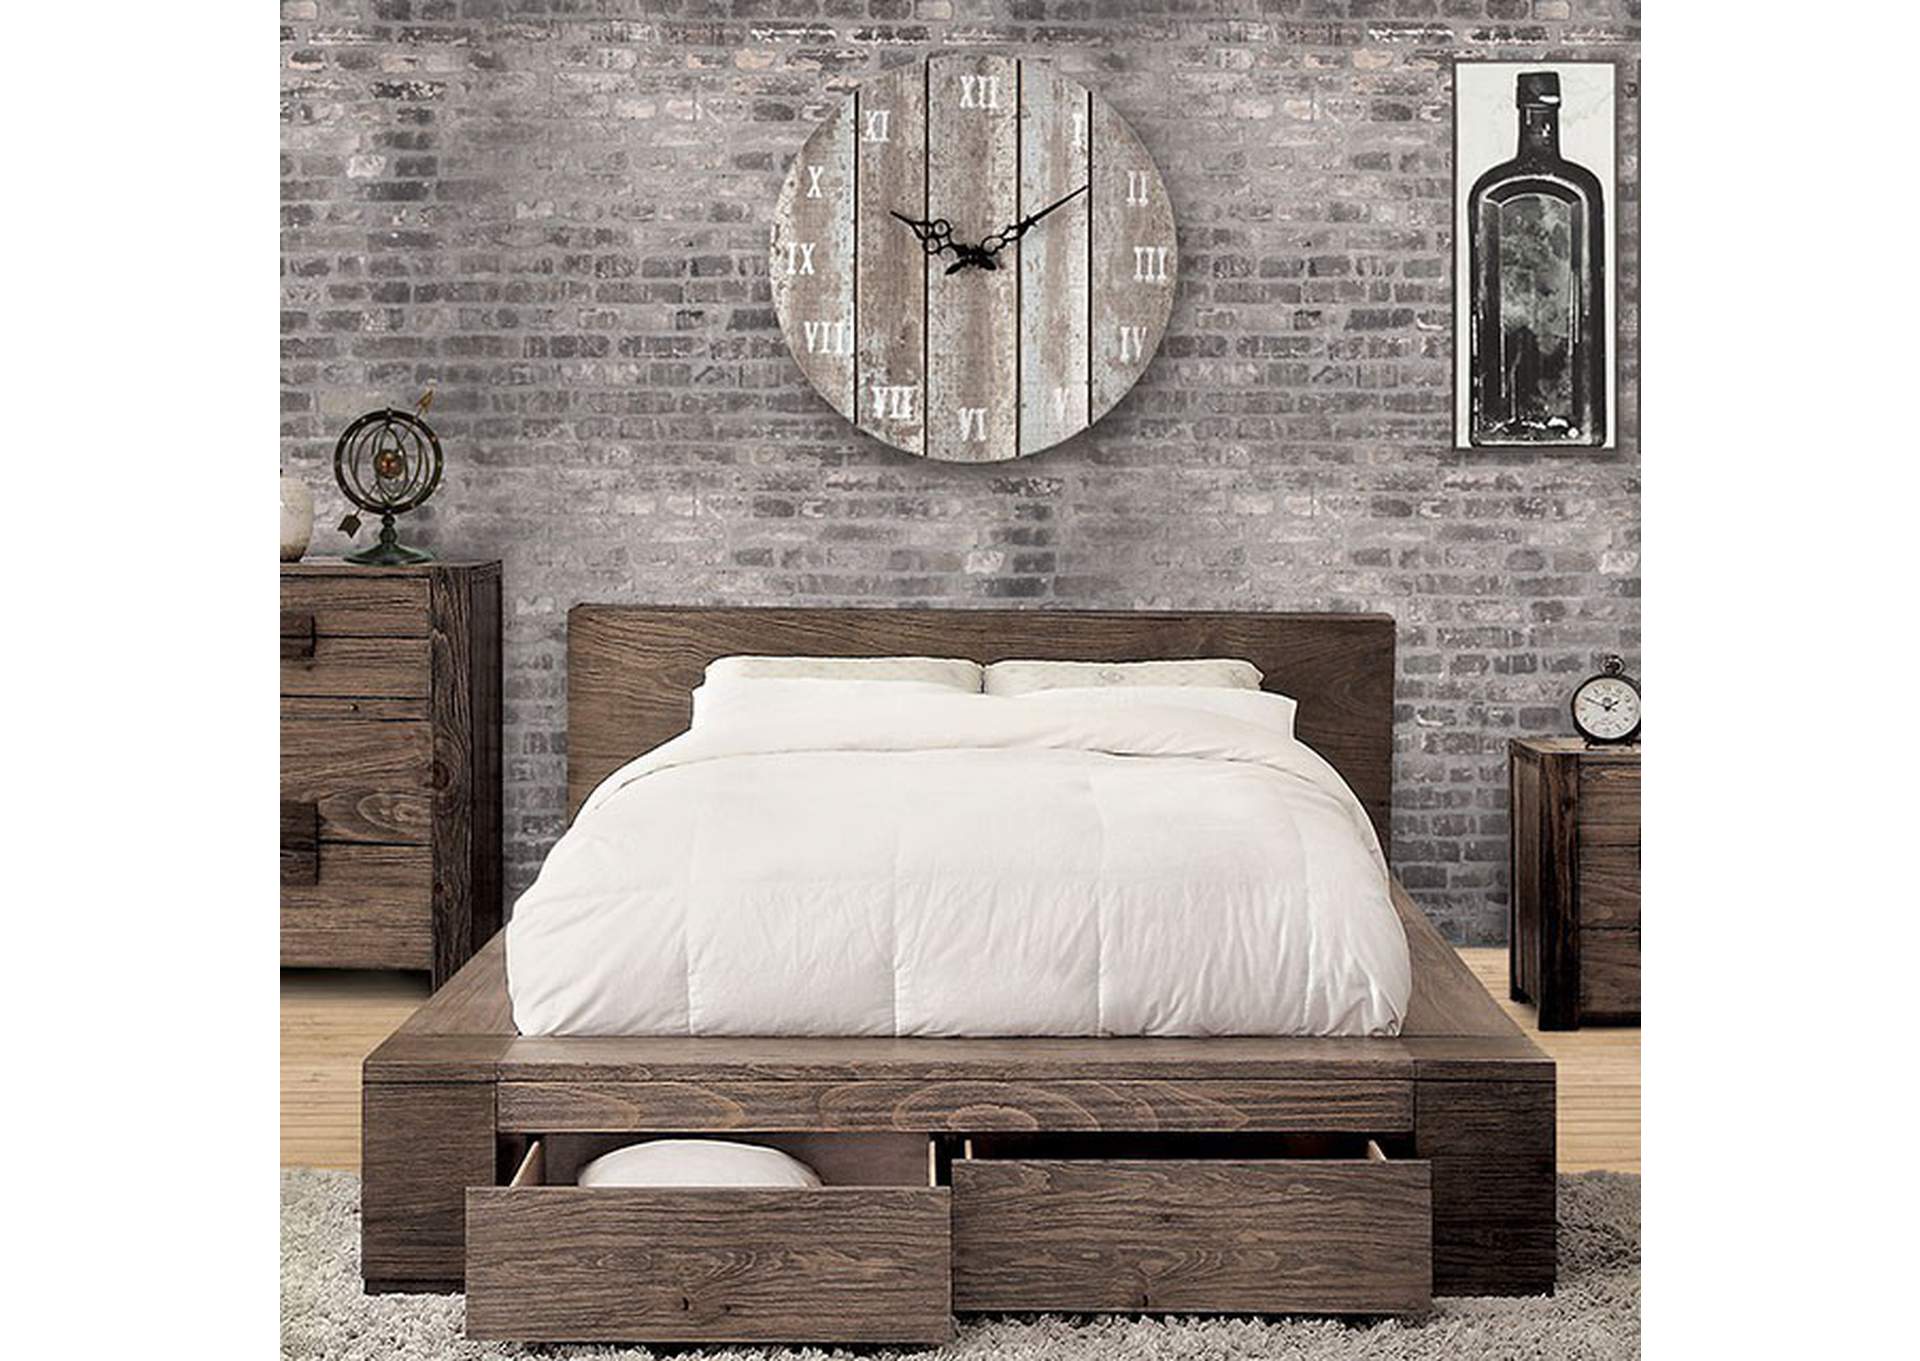 Janeiro Rustic Natural Tone Queen Bed,Furniture of America